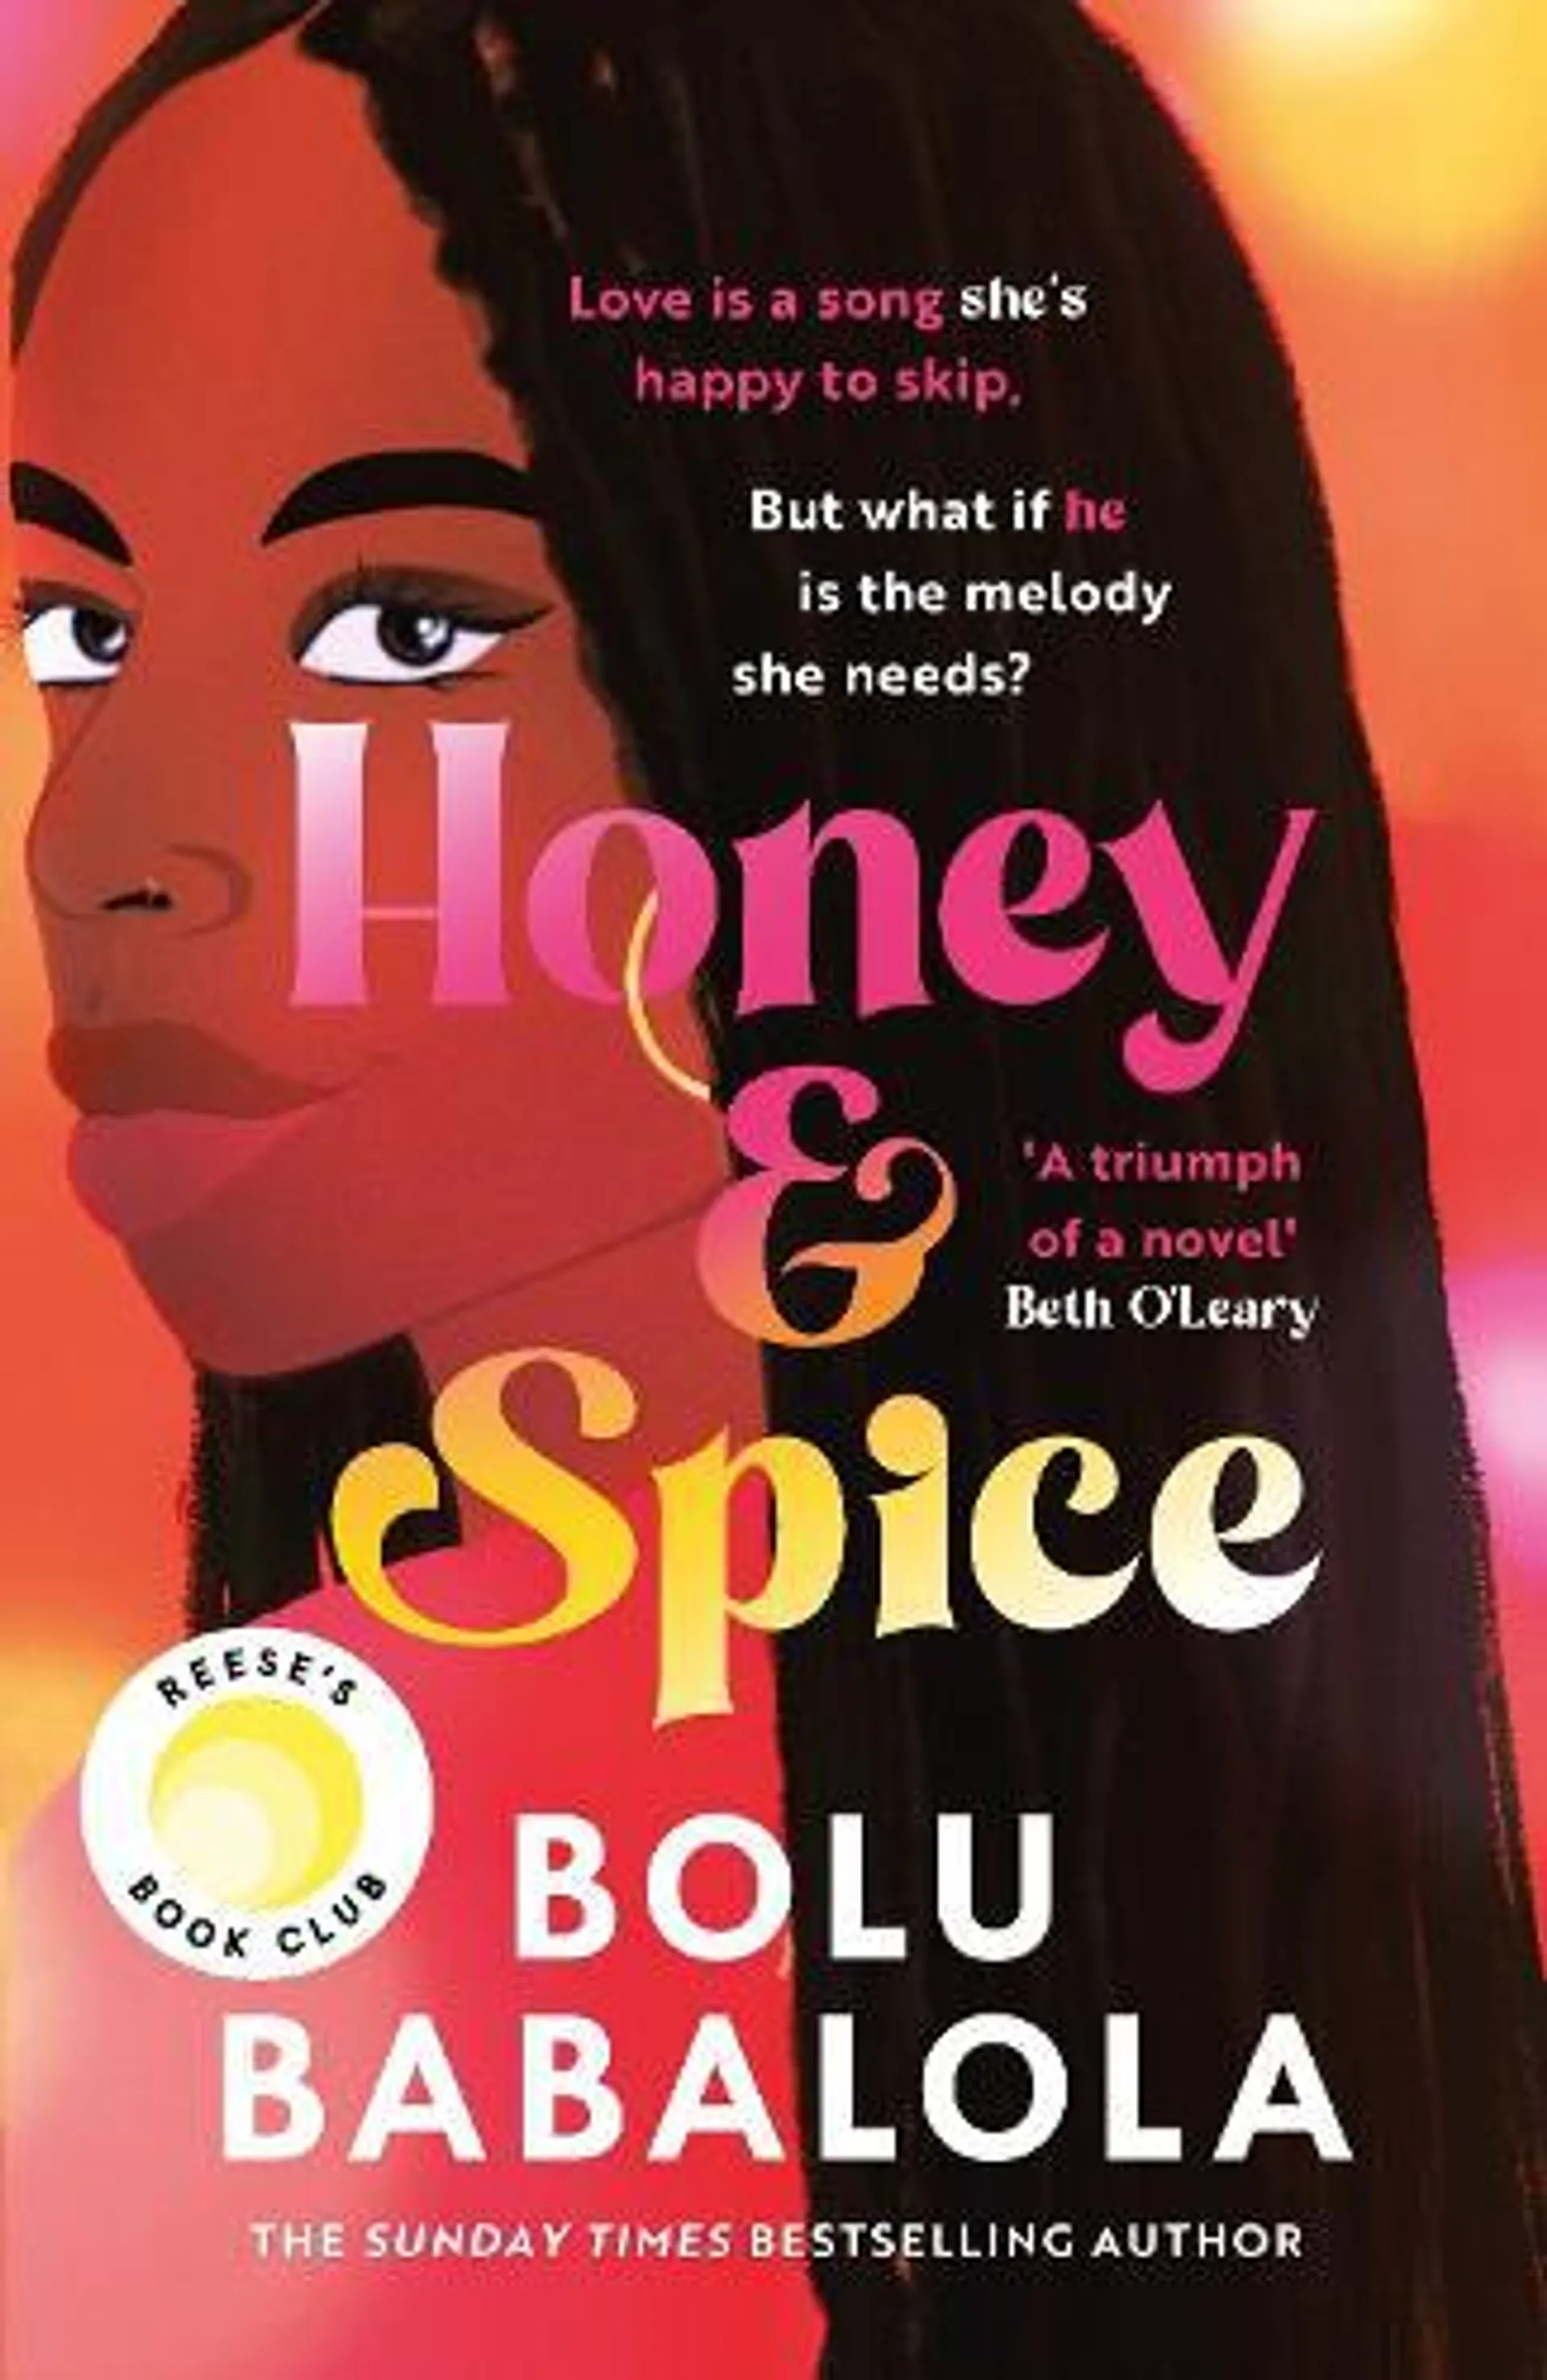 Honey & Spice (Paperback)